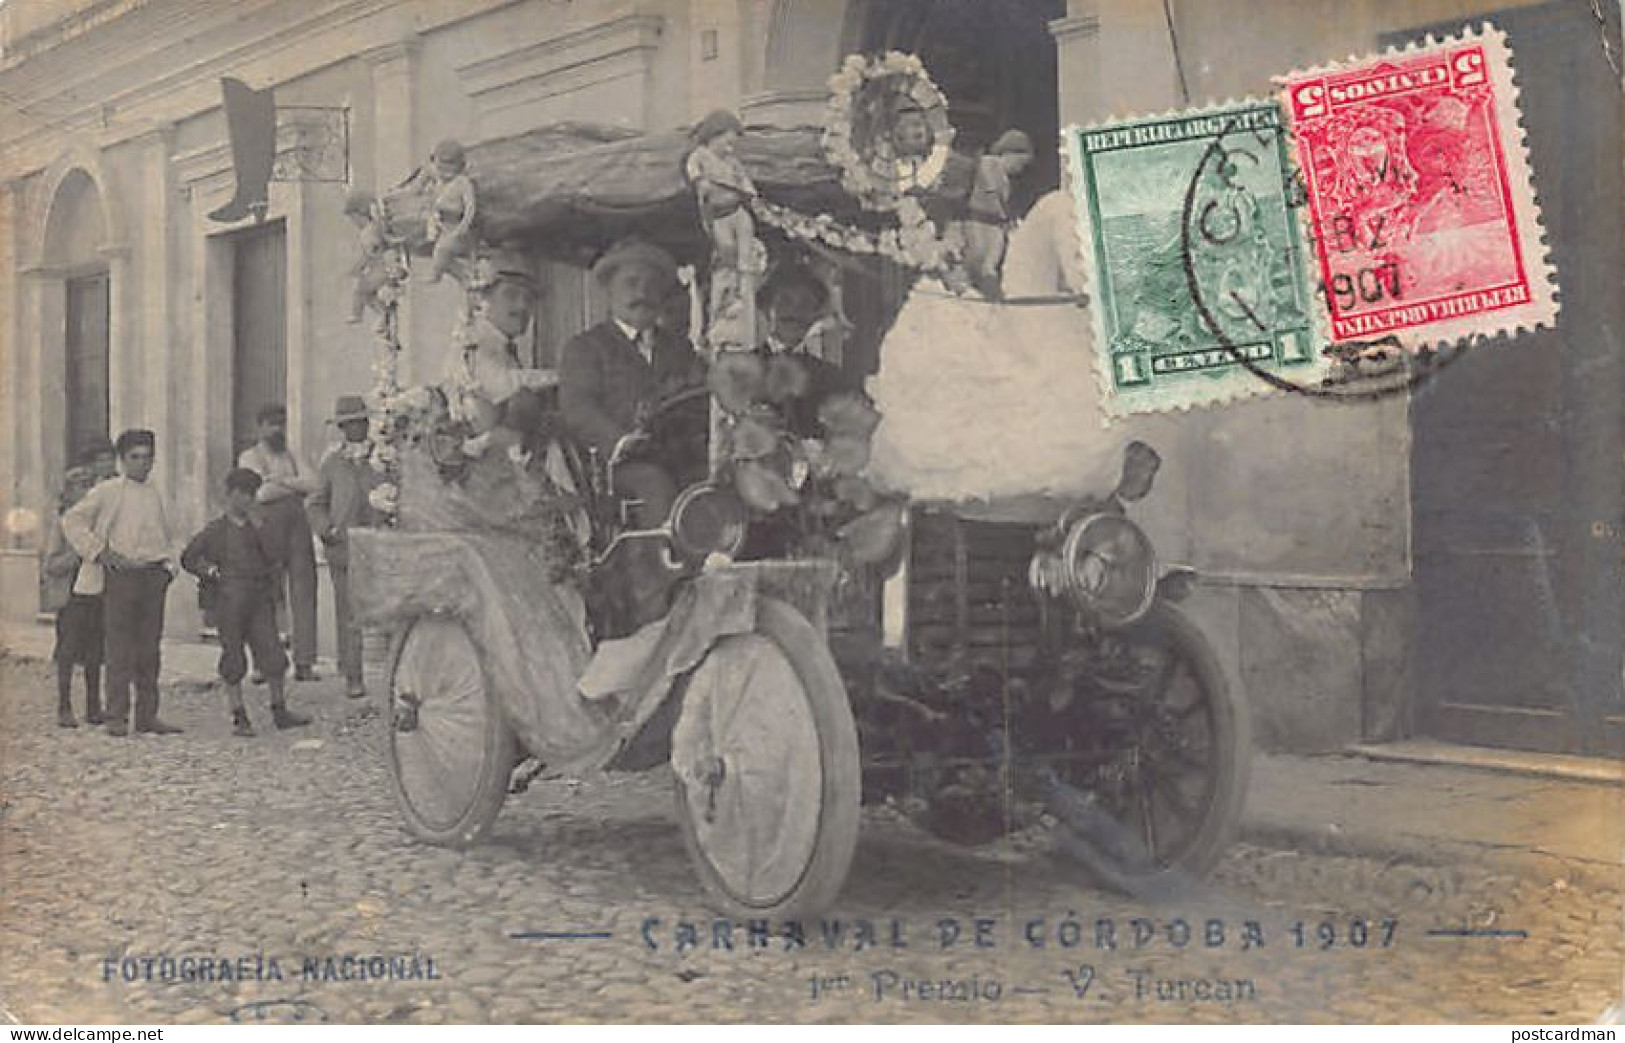 Argentina - CORDOBA - Carnaval 1907, Primer Premio - Fotografia Nacional - REAL PHOTO. - Argentine